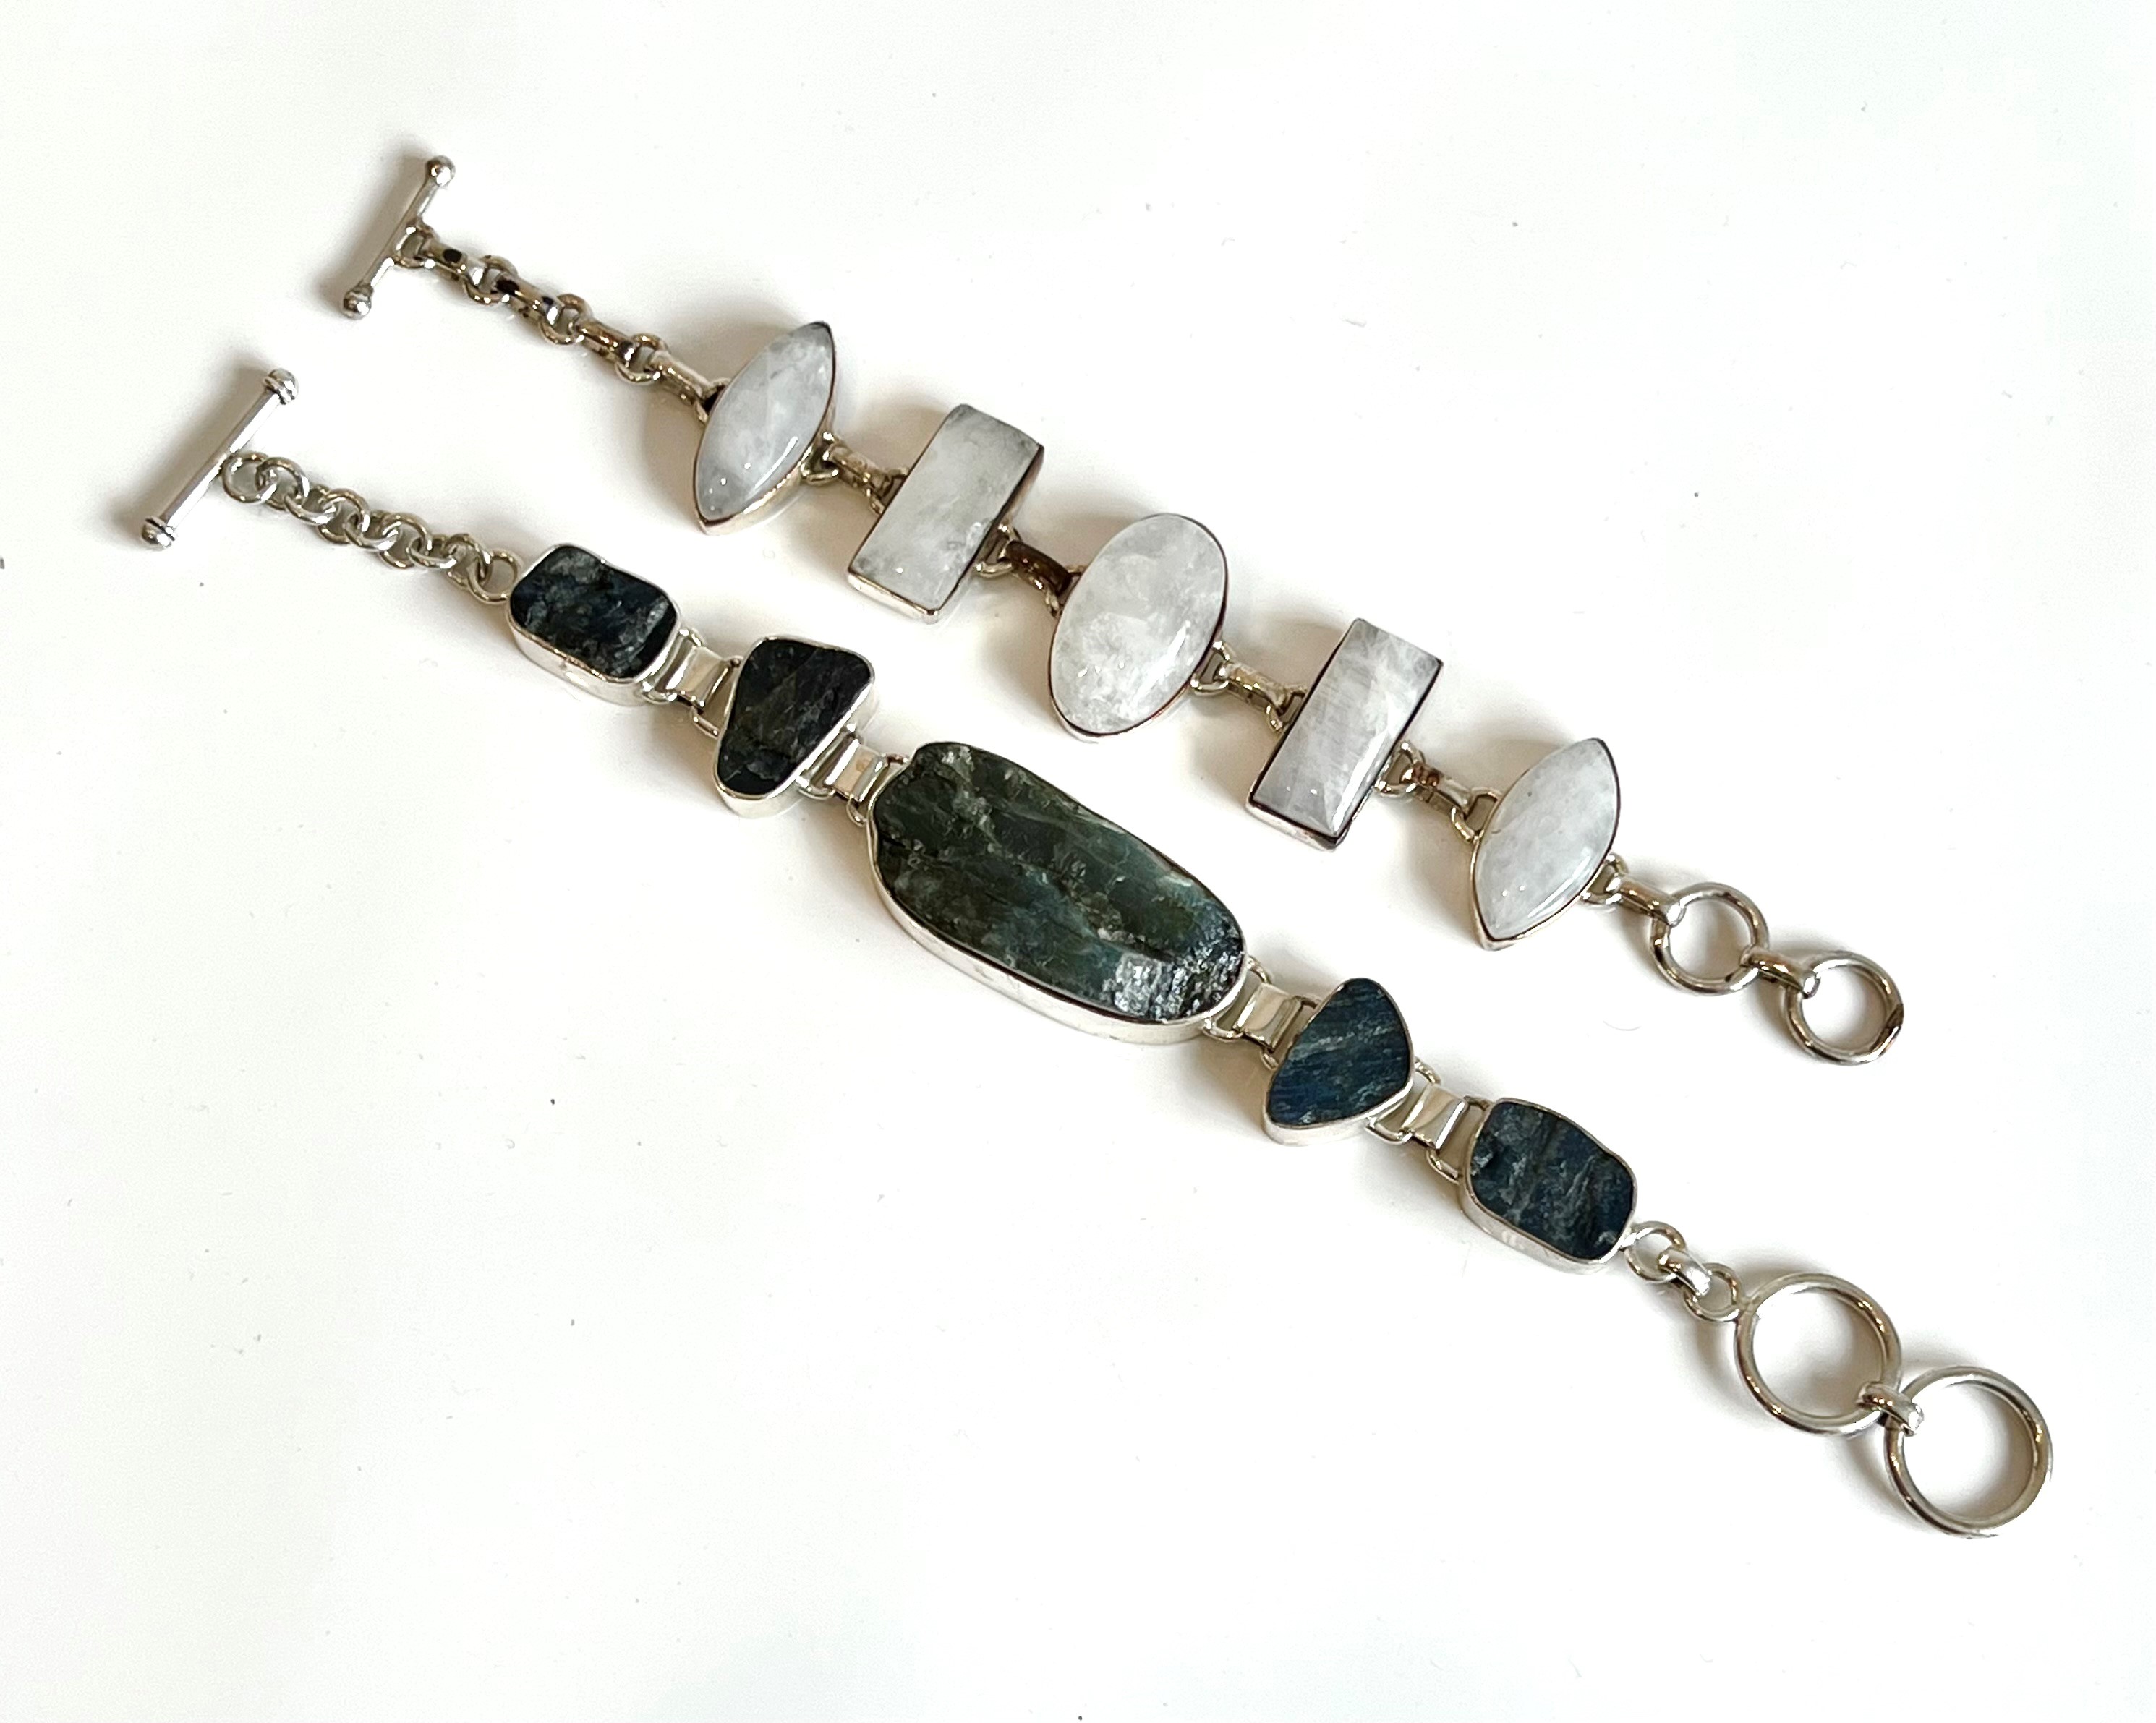 Two sterling silver and gemstone bracelets: 1. five polished cabochon moonstones in alternate